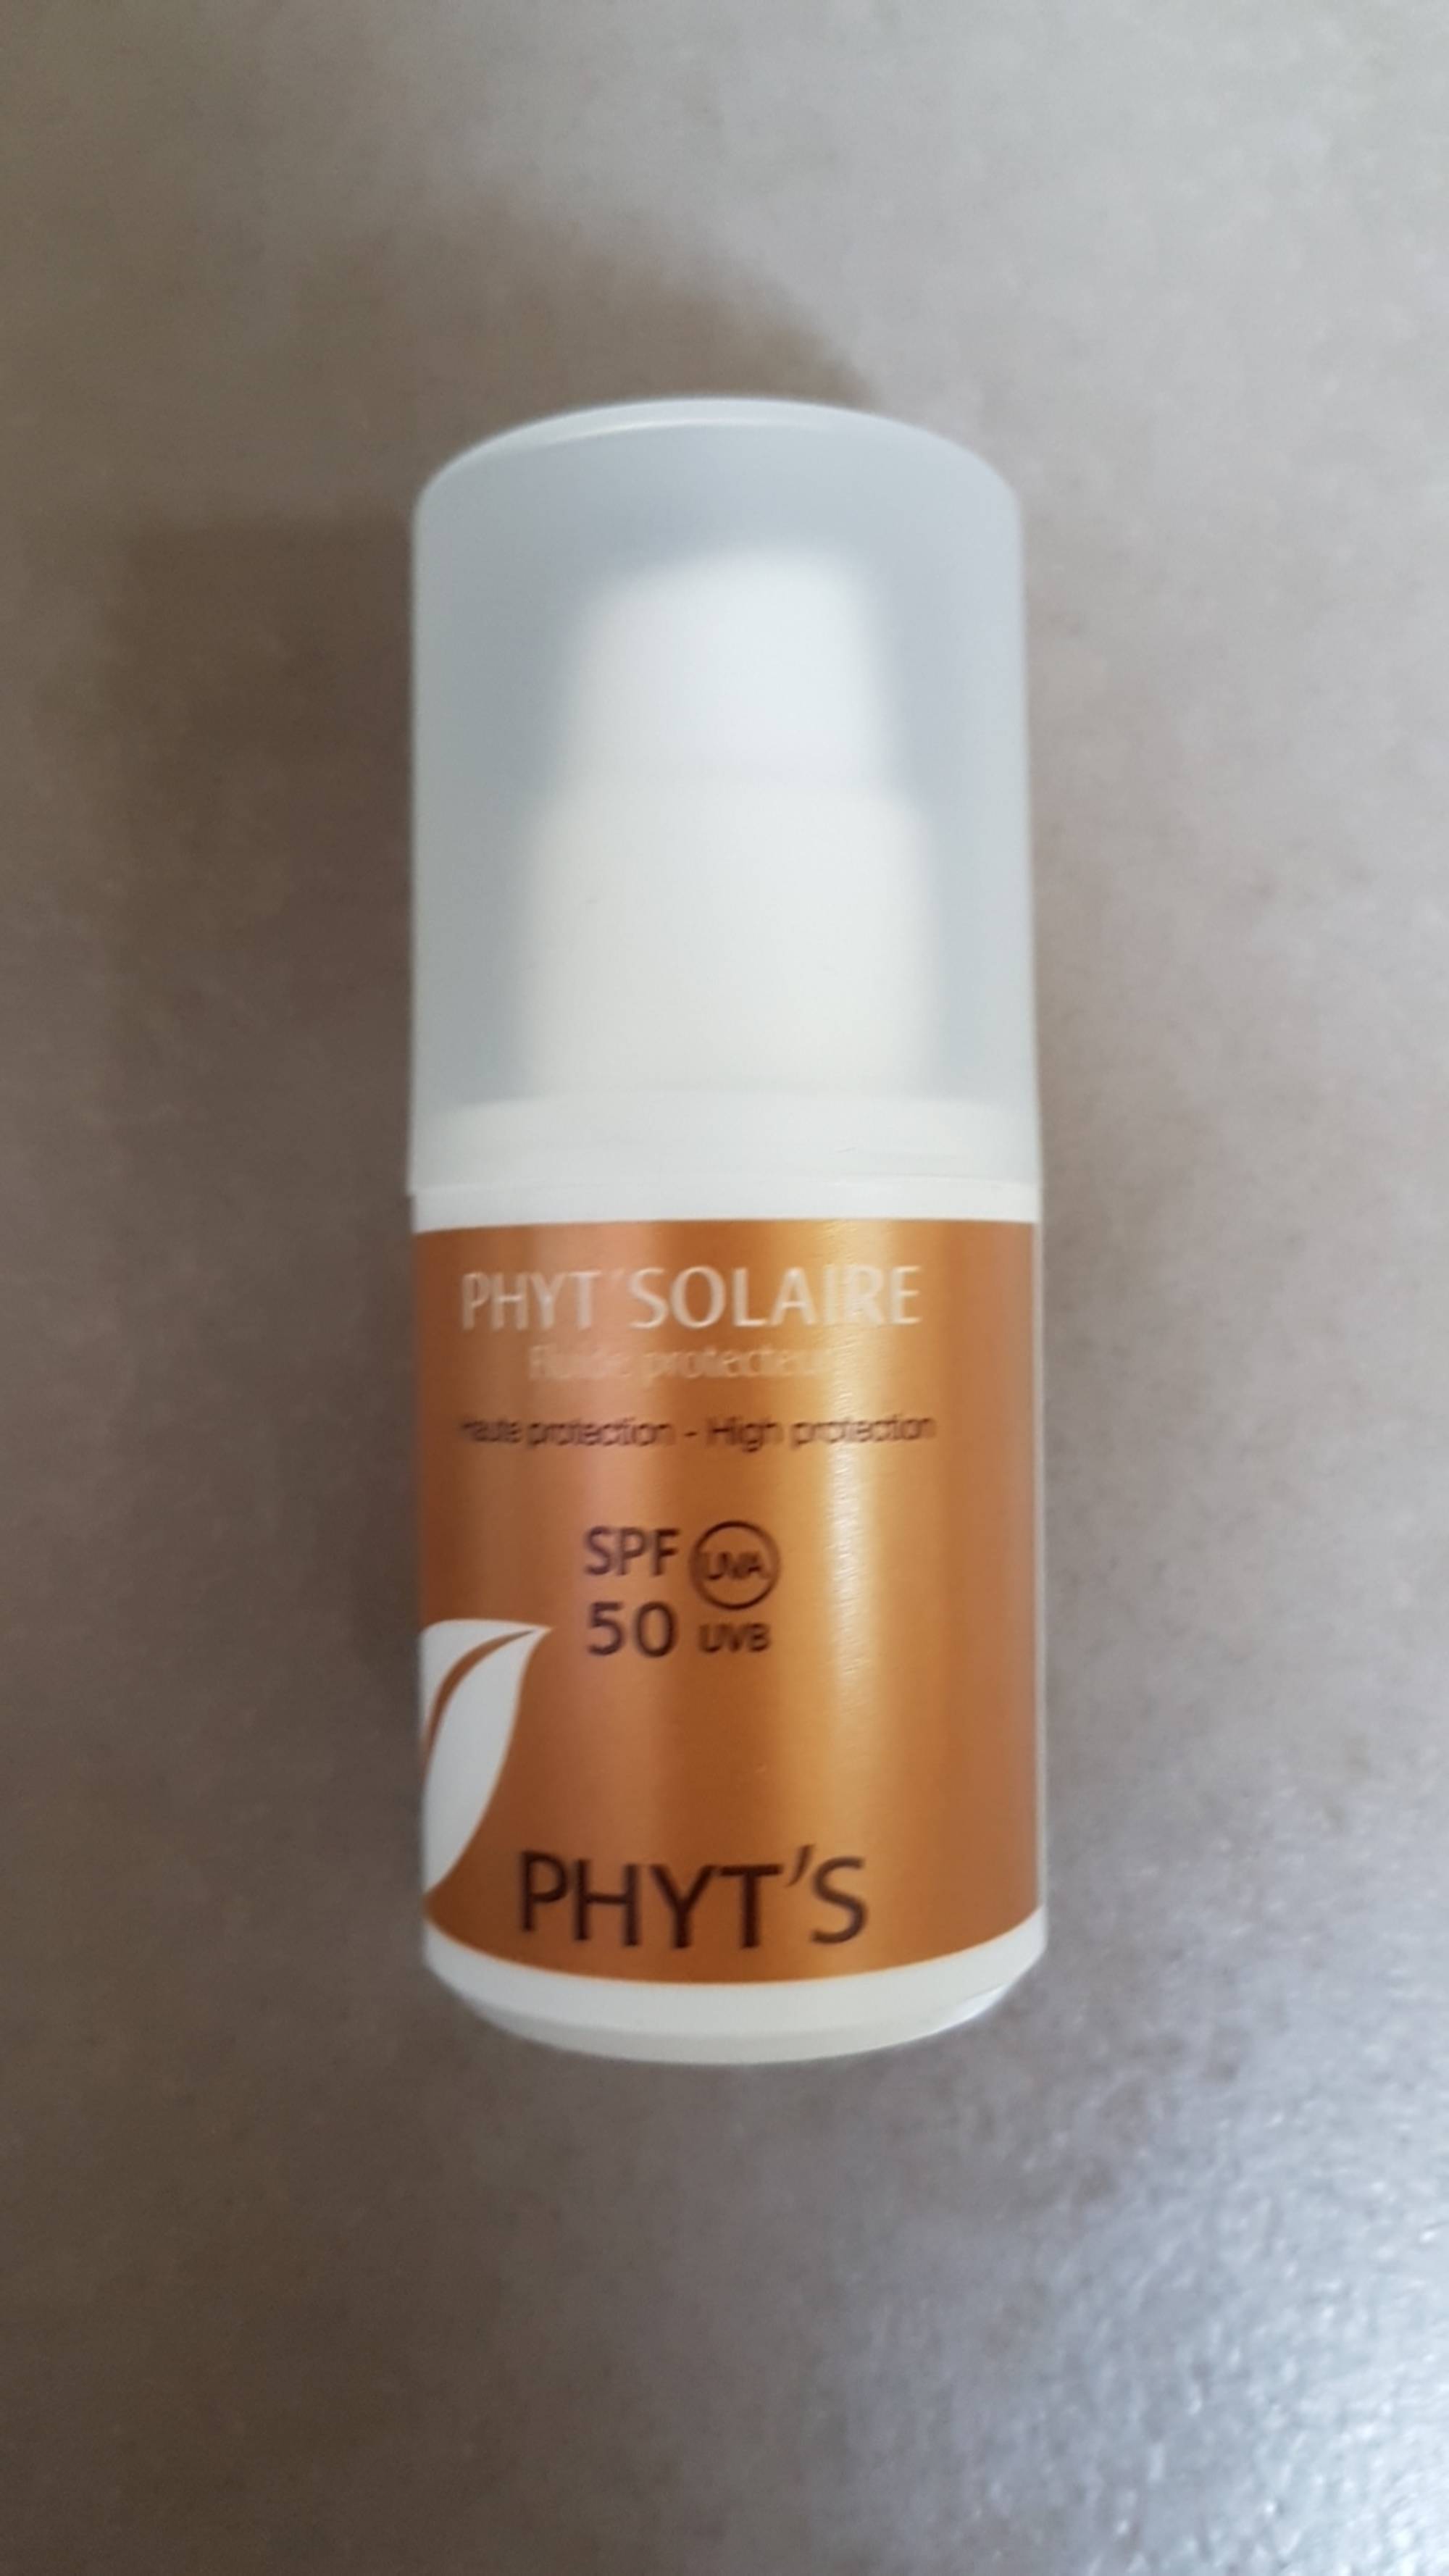 PHYT'S - Phyt'solaire - Fluide protecteur spf 50